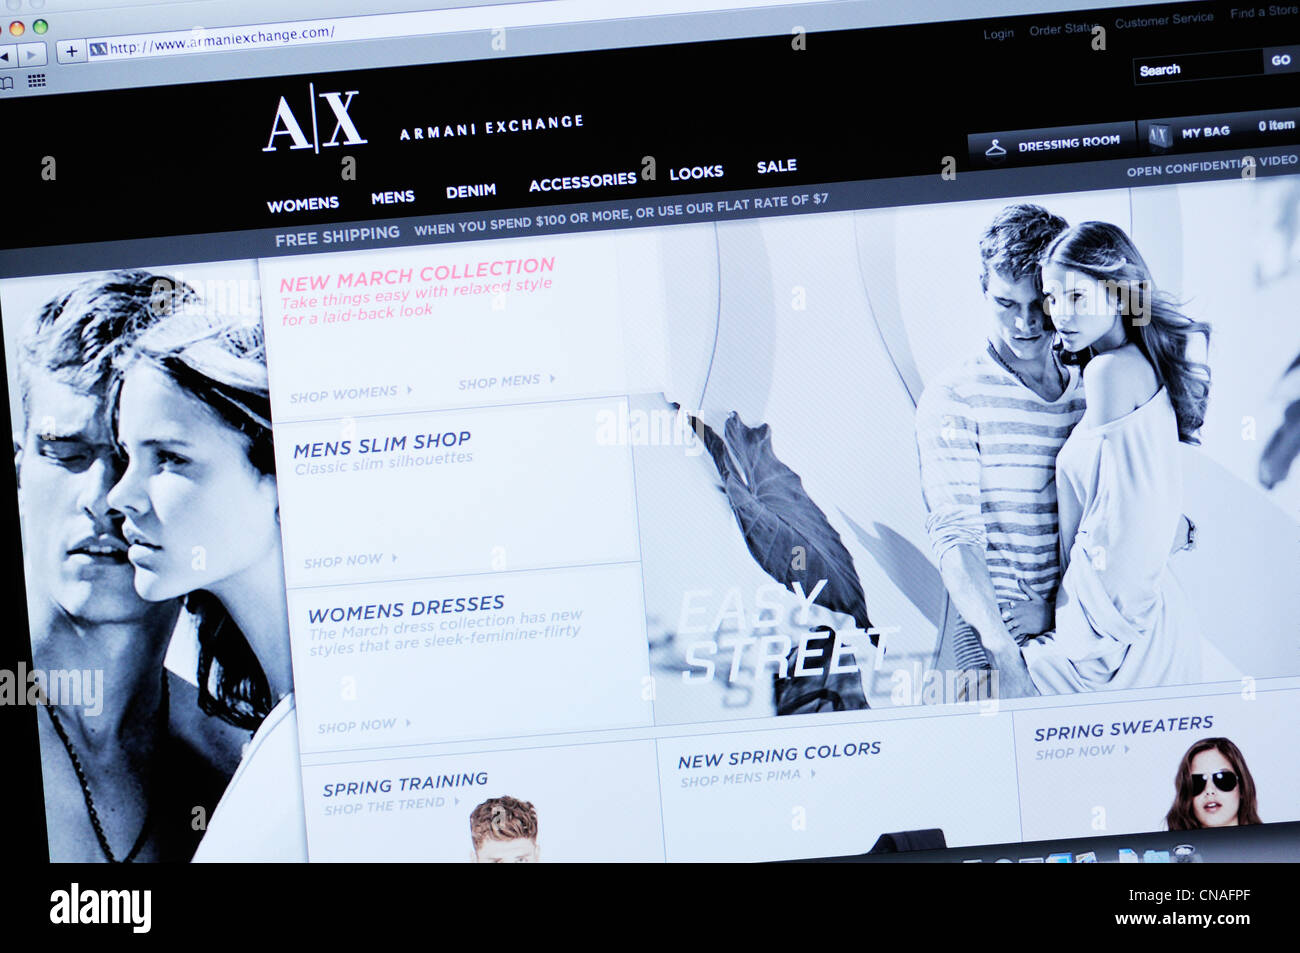 Armani Exchange website Stock Photo - Alamy